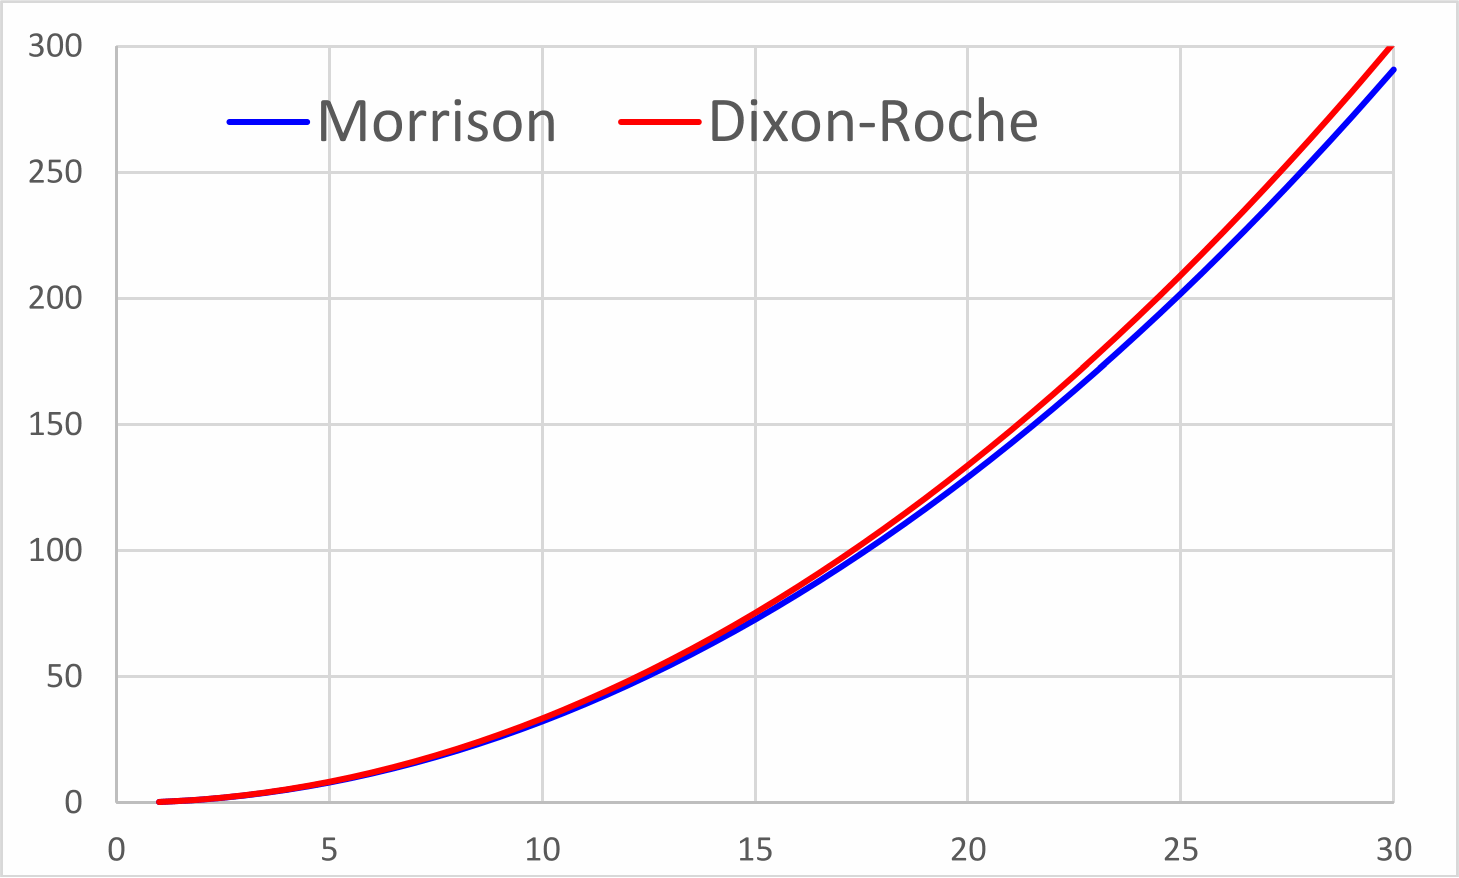 atomspheric drag force; Morrison vs Dixon-Roche